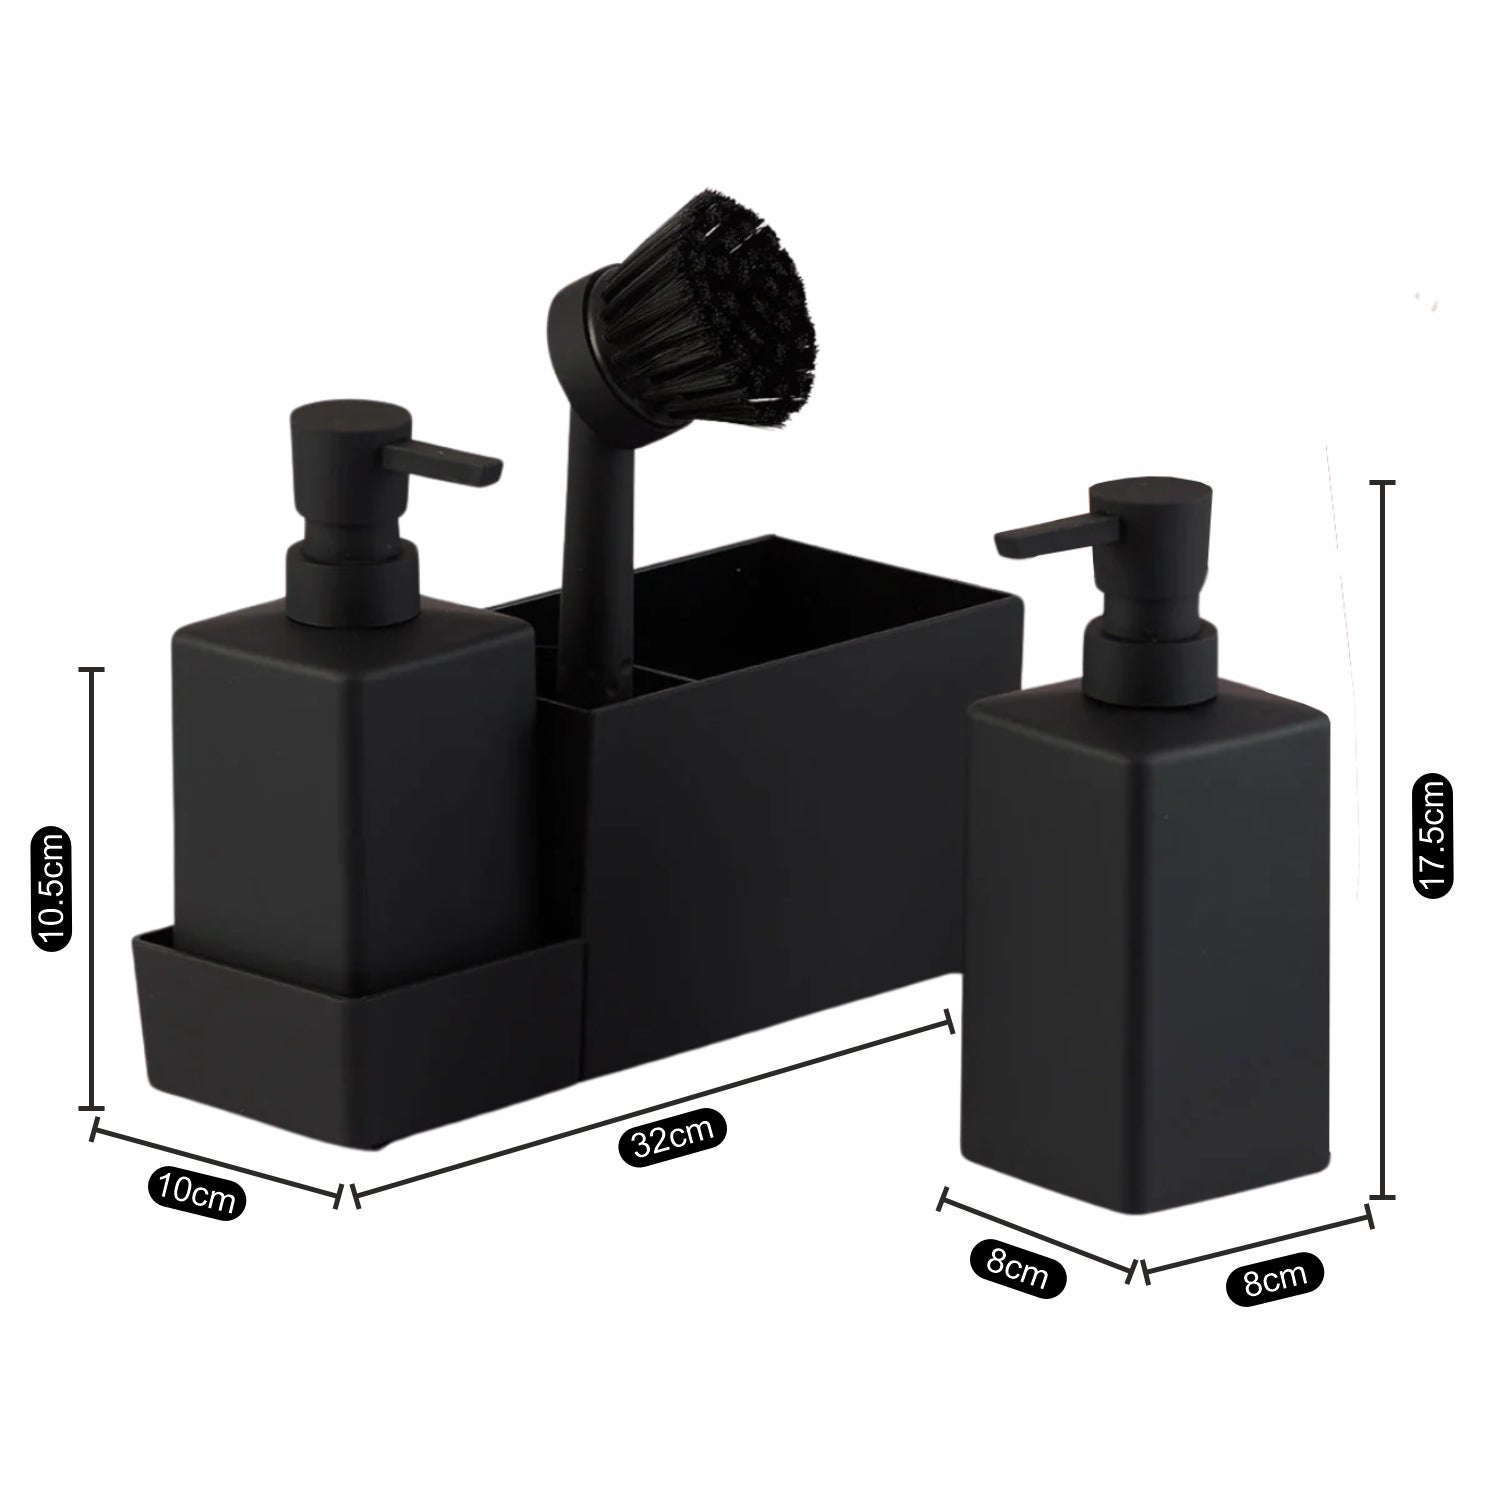 Acrylic Bathroom Accessories Set of 4 Bath Set with Soap Dispenser (10021)